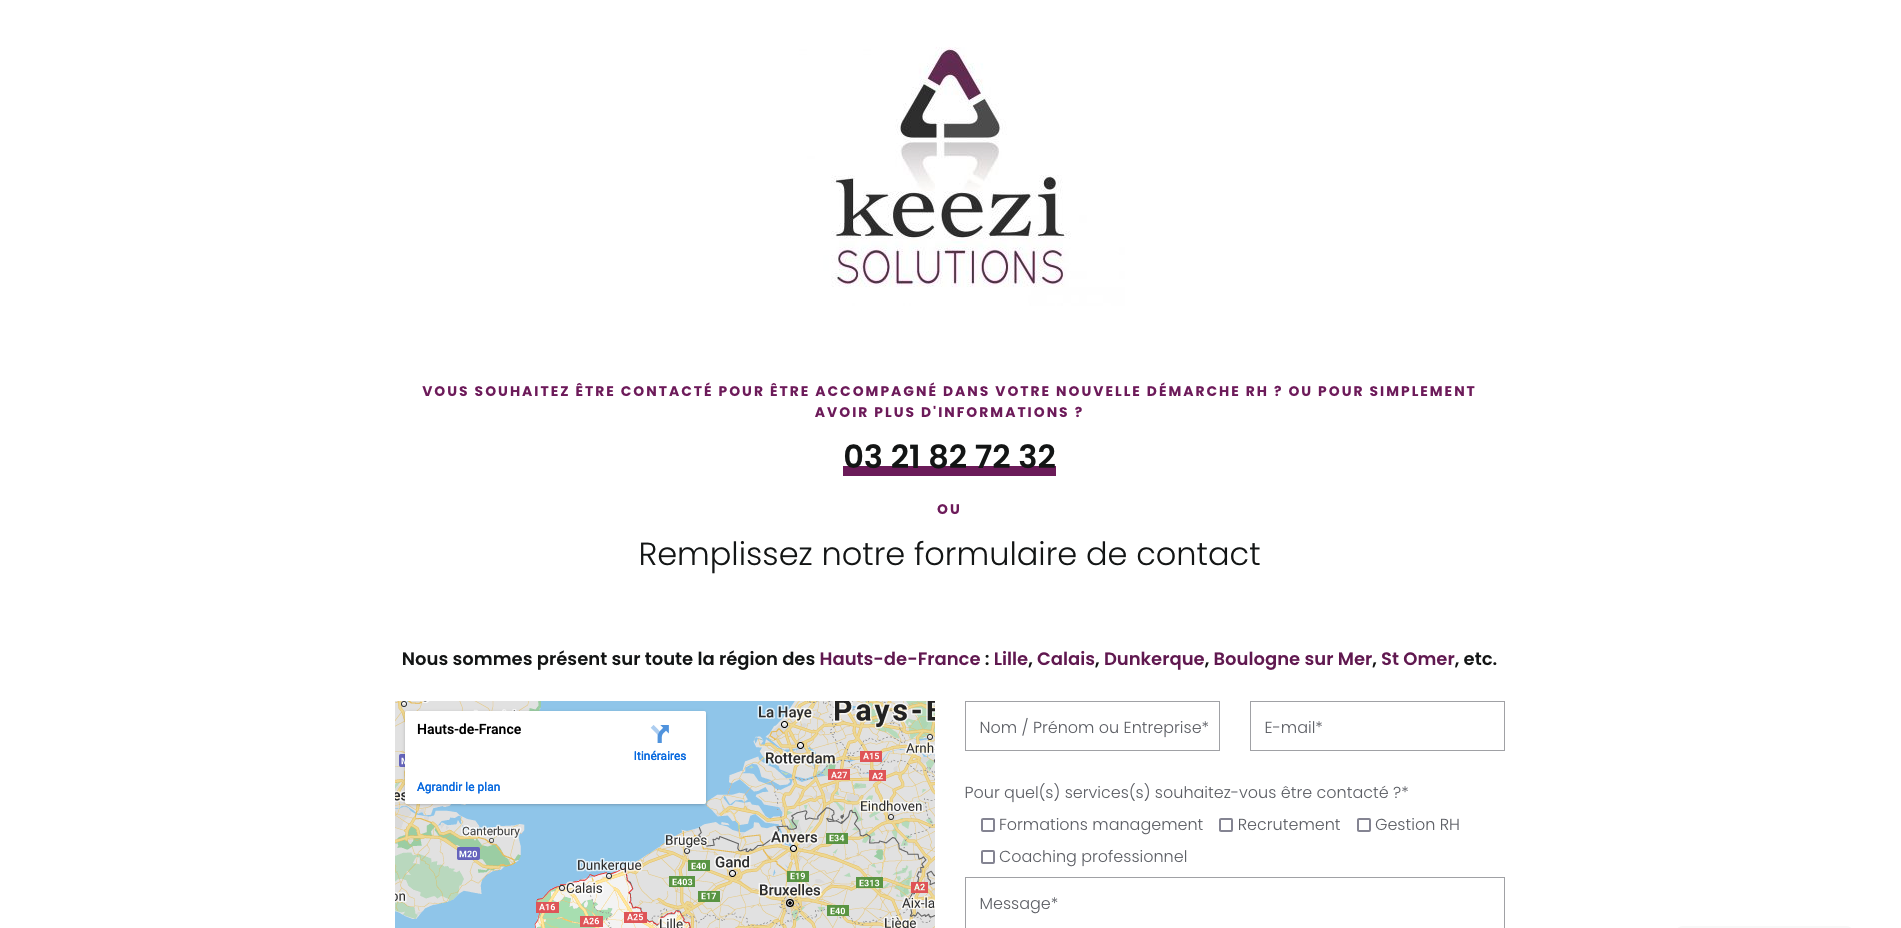 keezi-solutions-contact